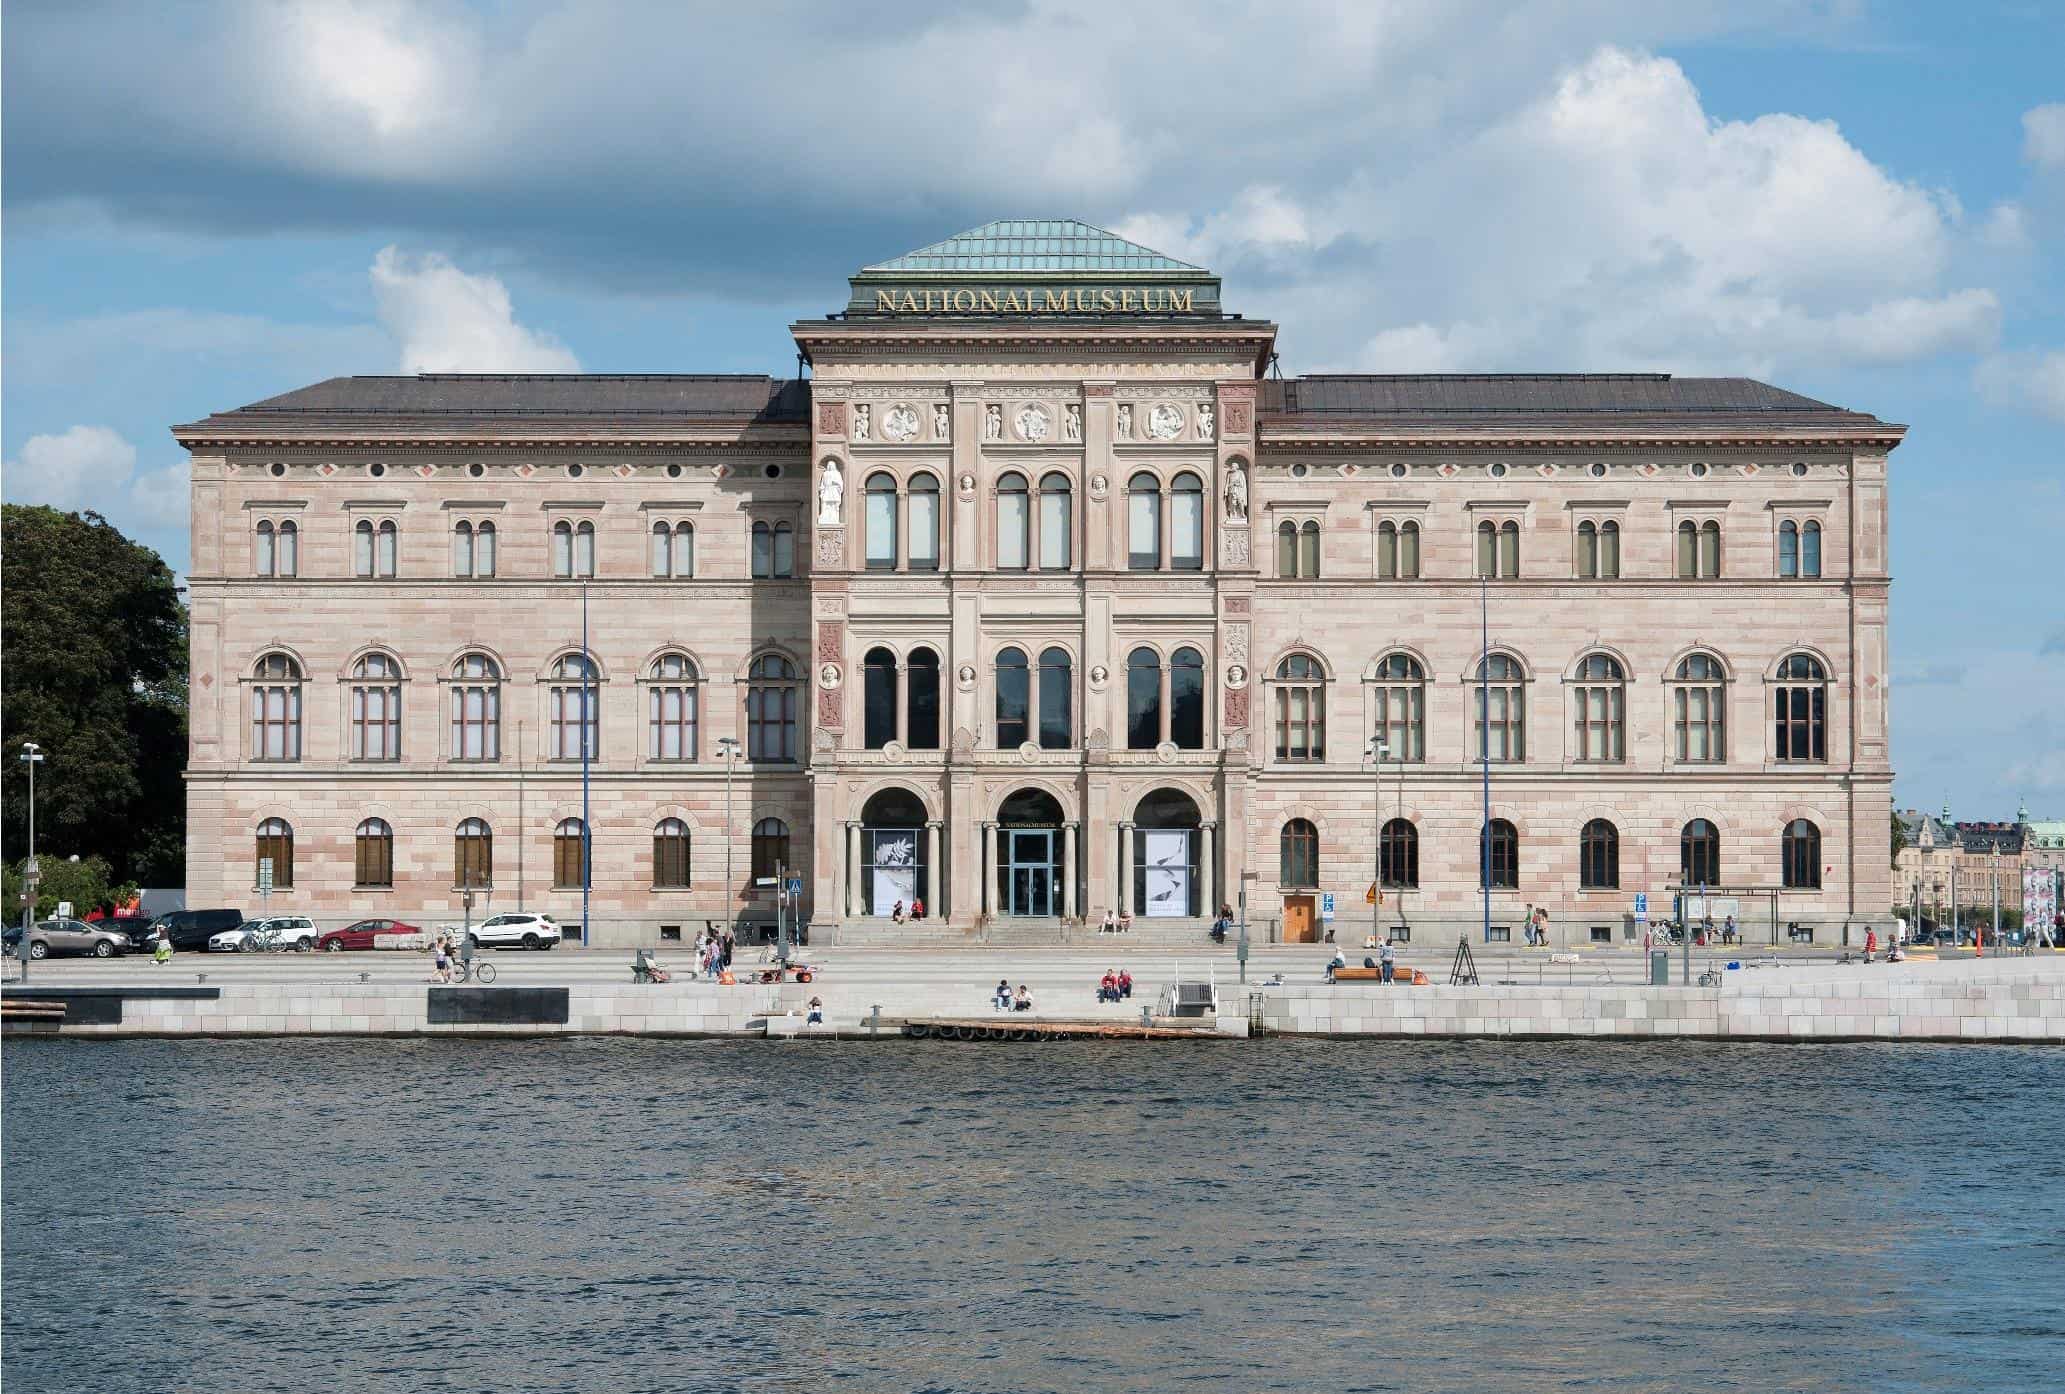 National museum of Sweden